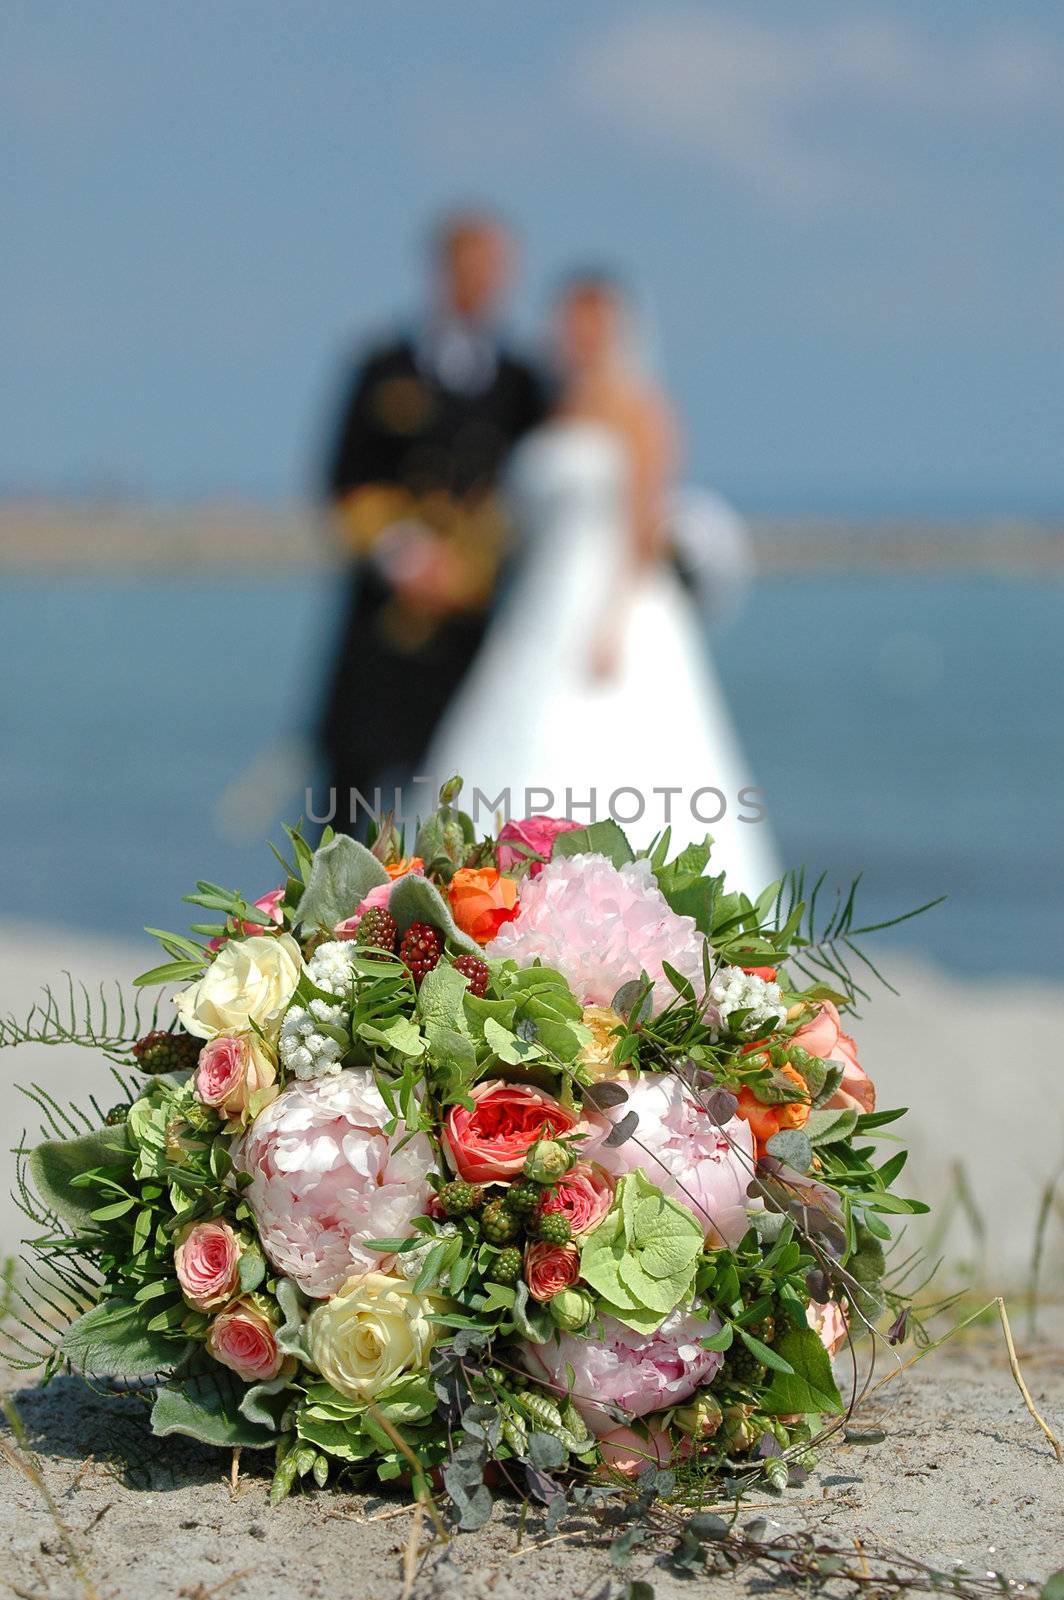 Flower bouquet, bride and groom. Focus on the wedding flower bouquet.